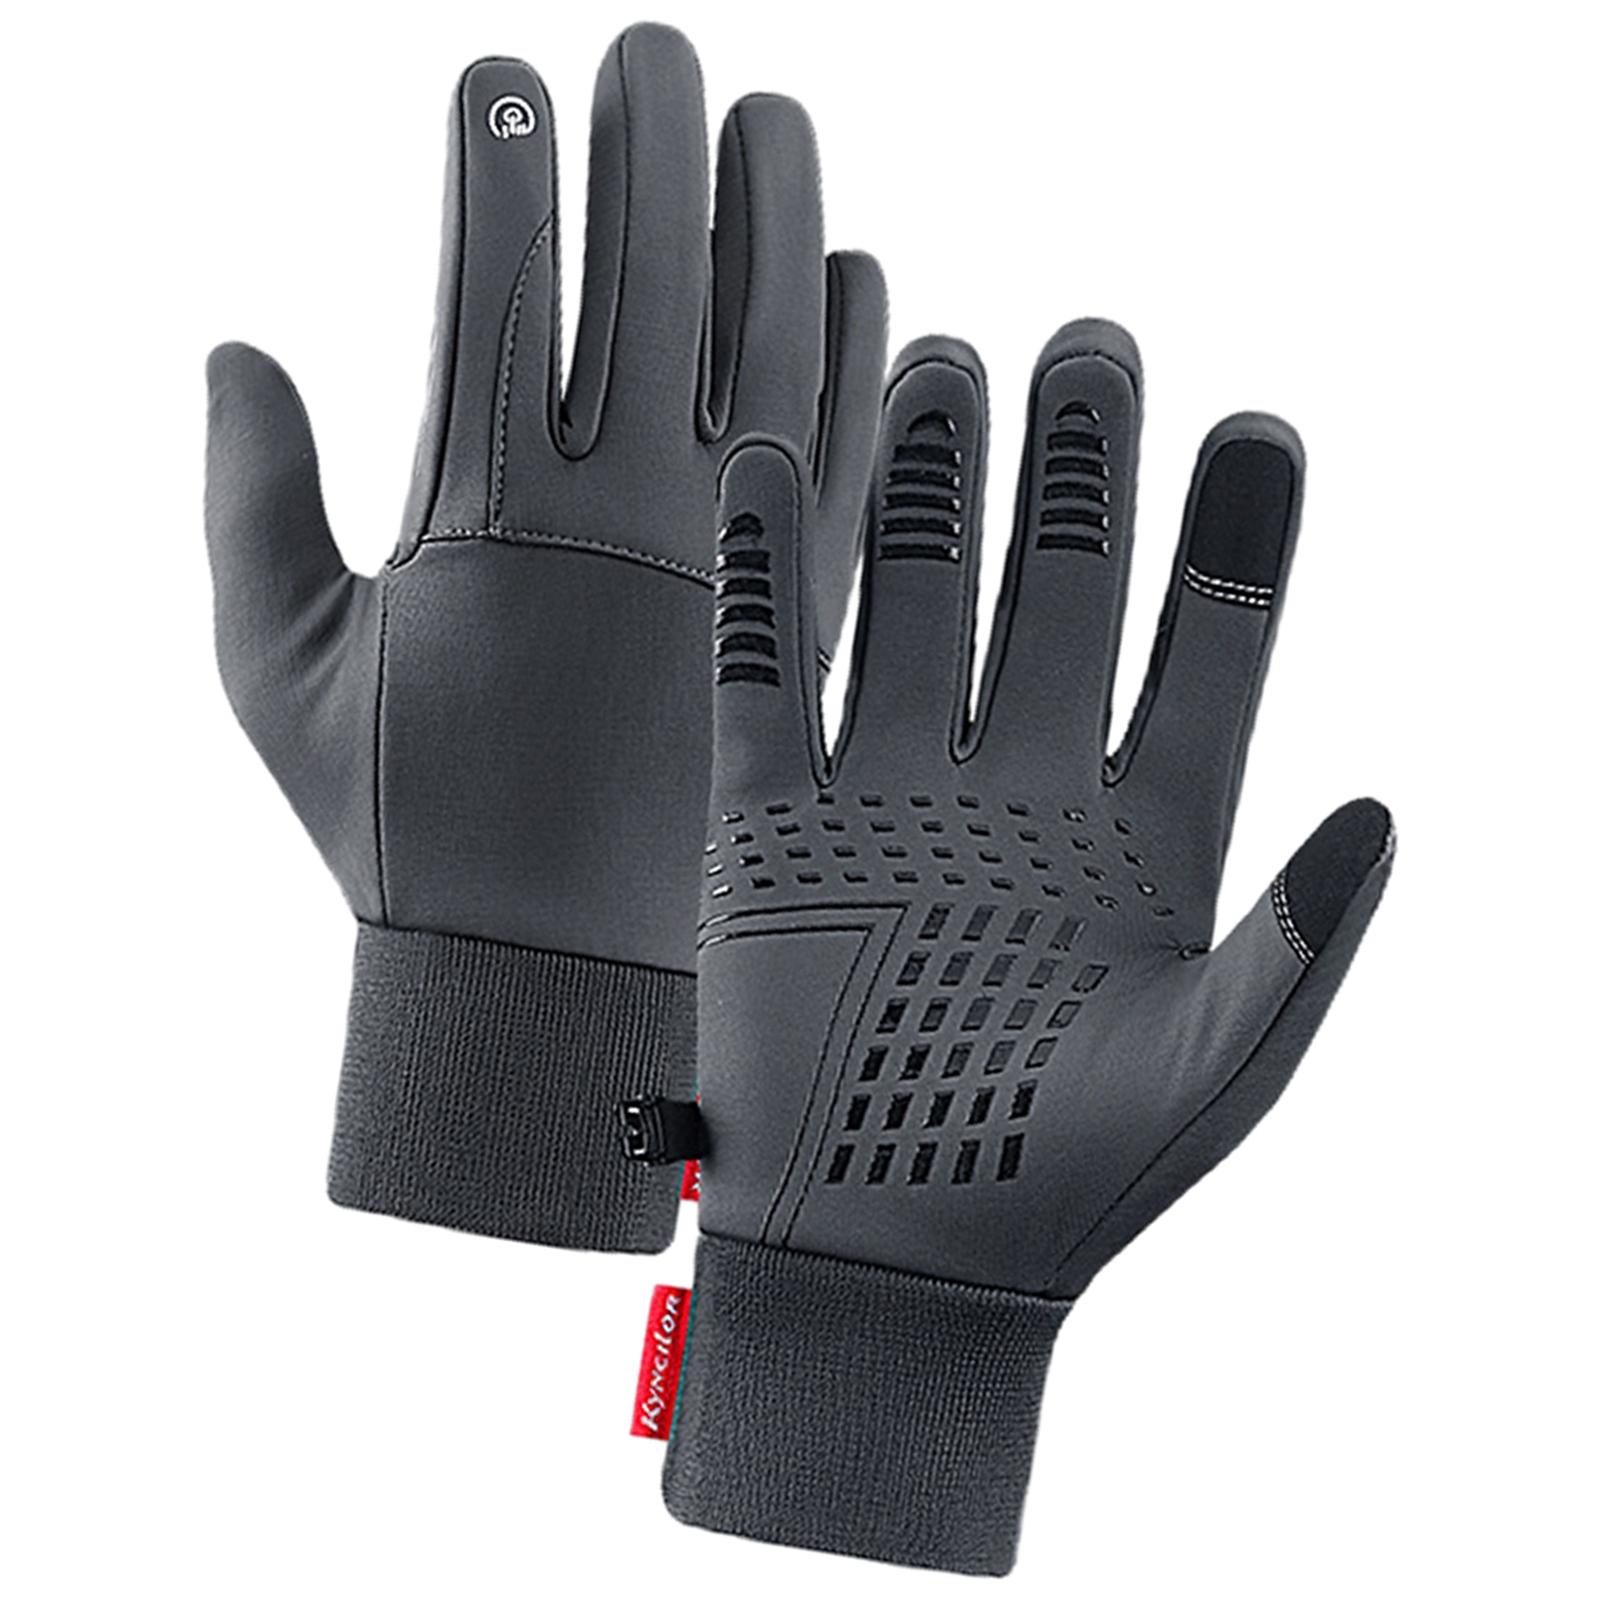 Touchscreen Mittens Cycling Glove Full Finger Warm Gloves for Women XL Black